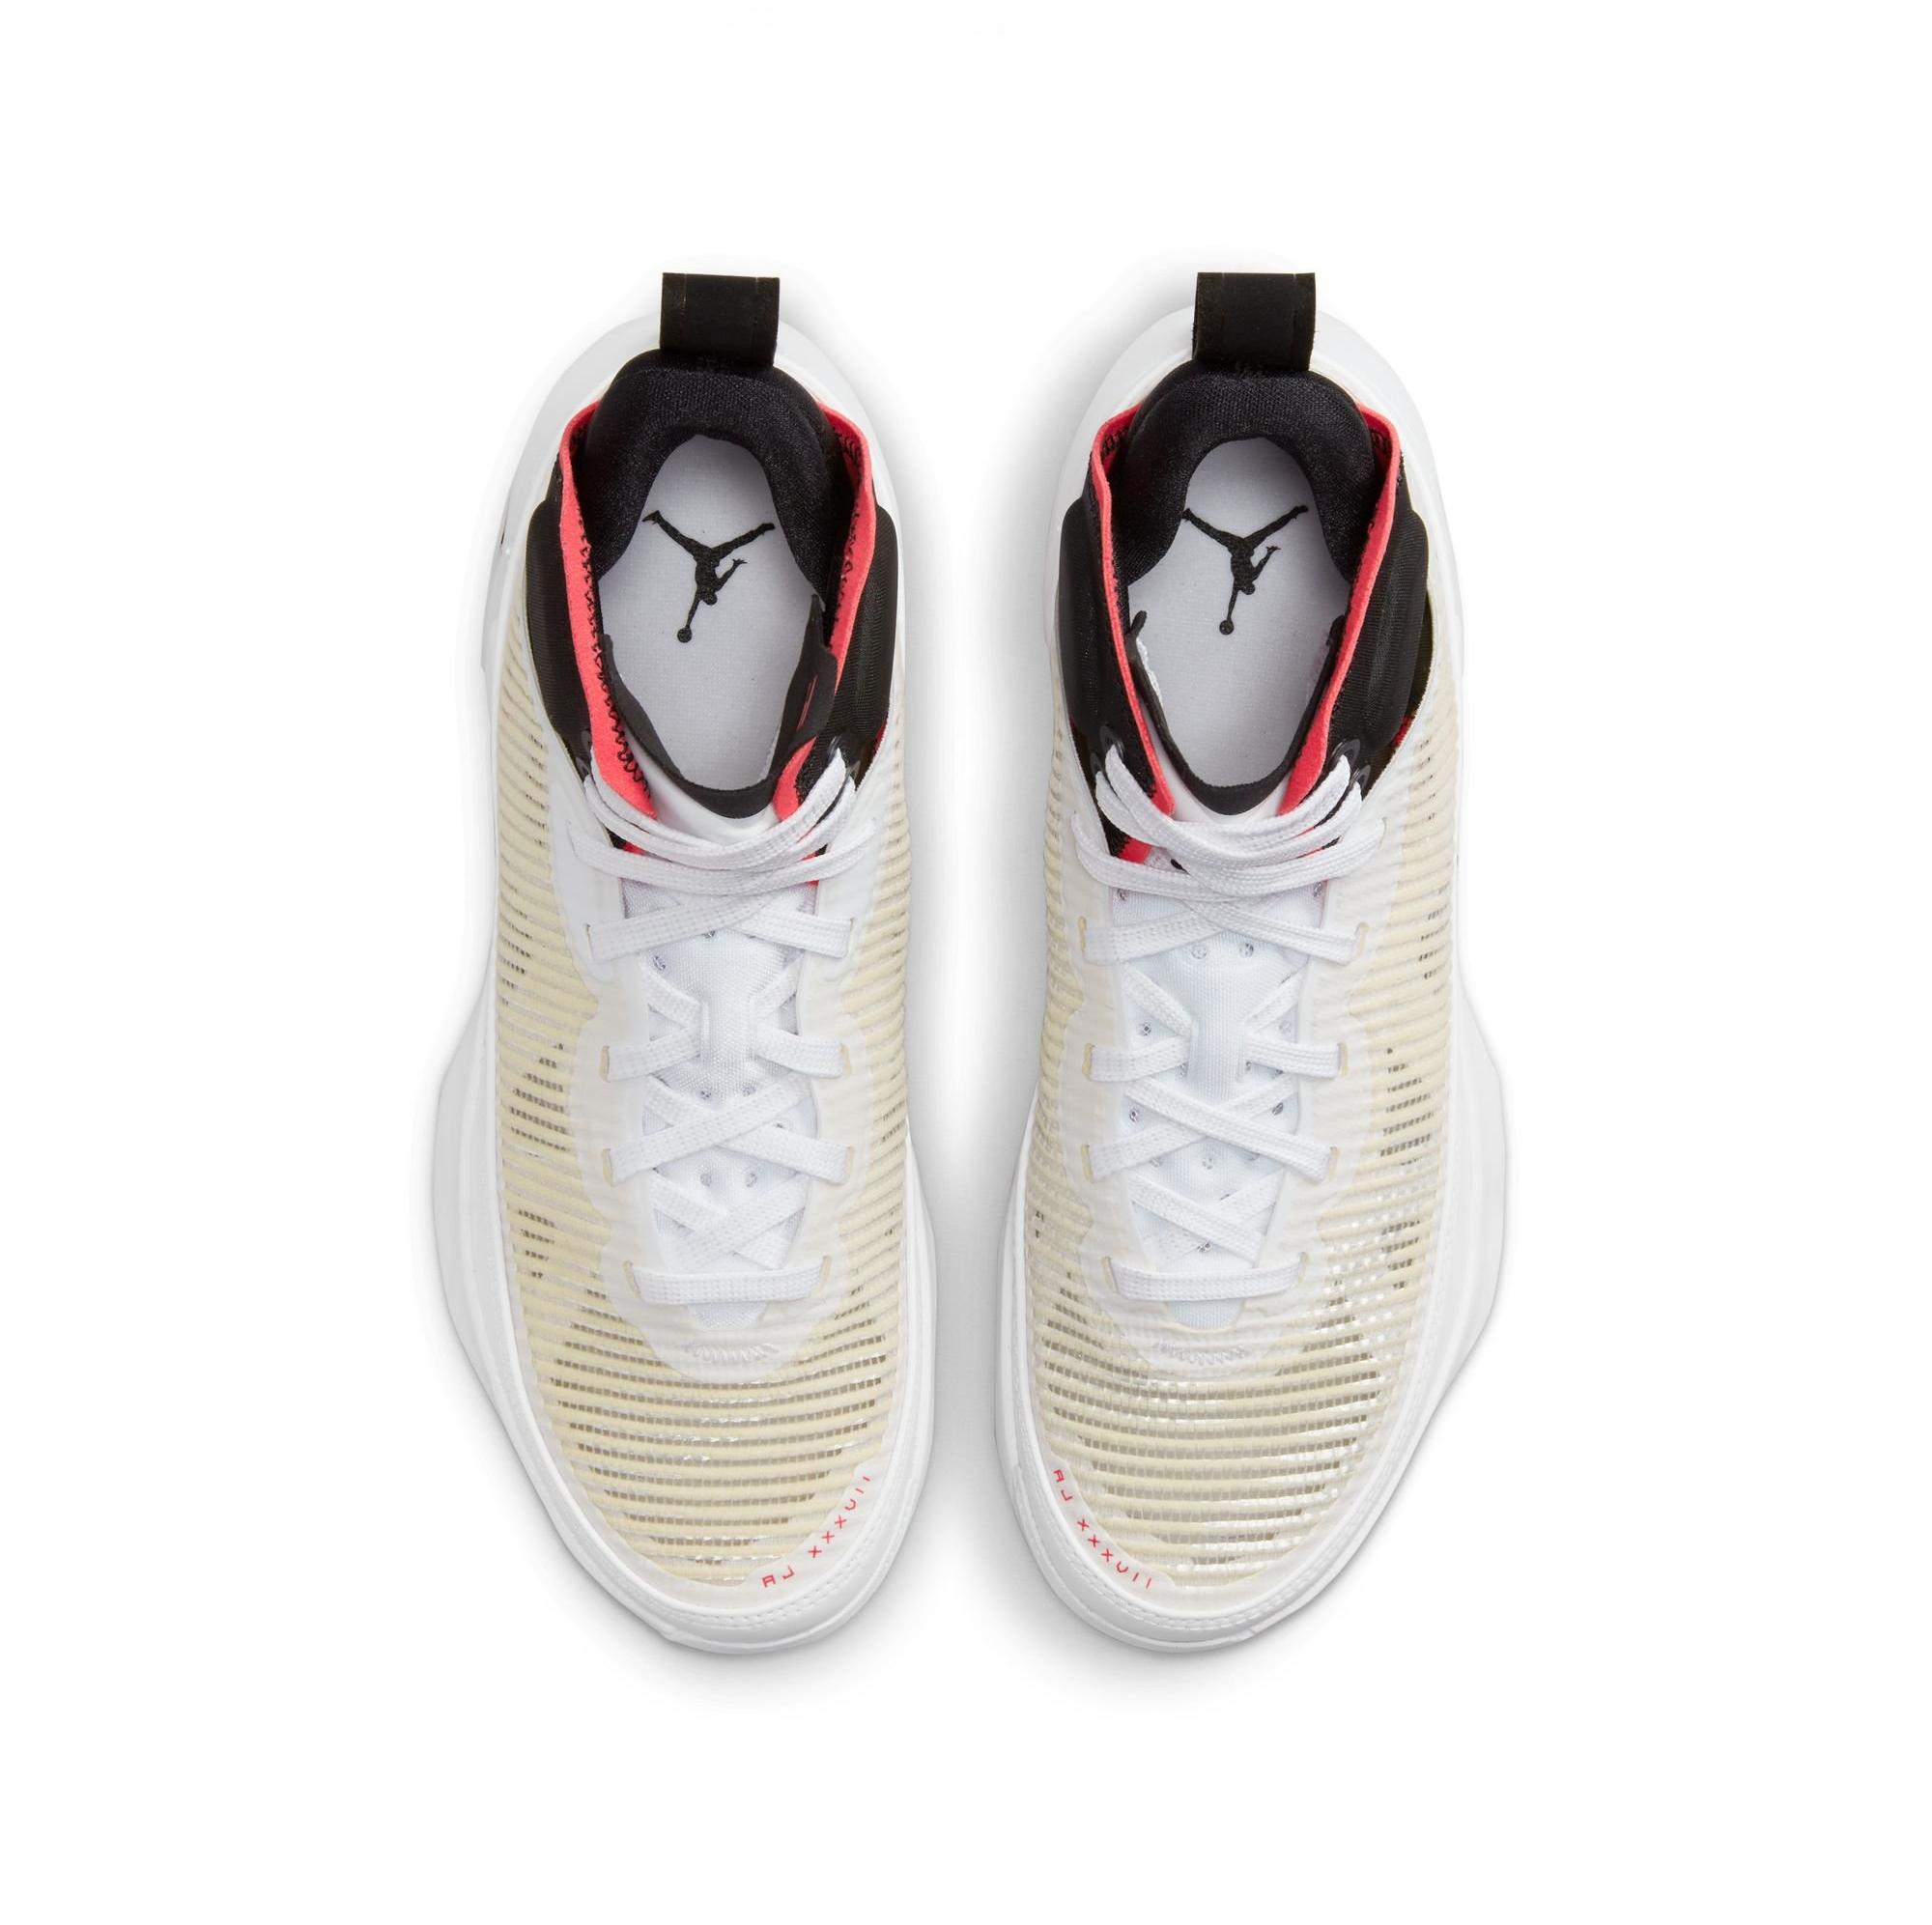 Sneakers Release – Jordan XXXVII “White/Black/Siren Red” Grade School ...